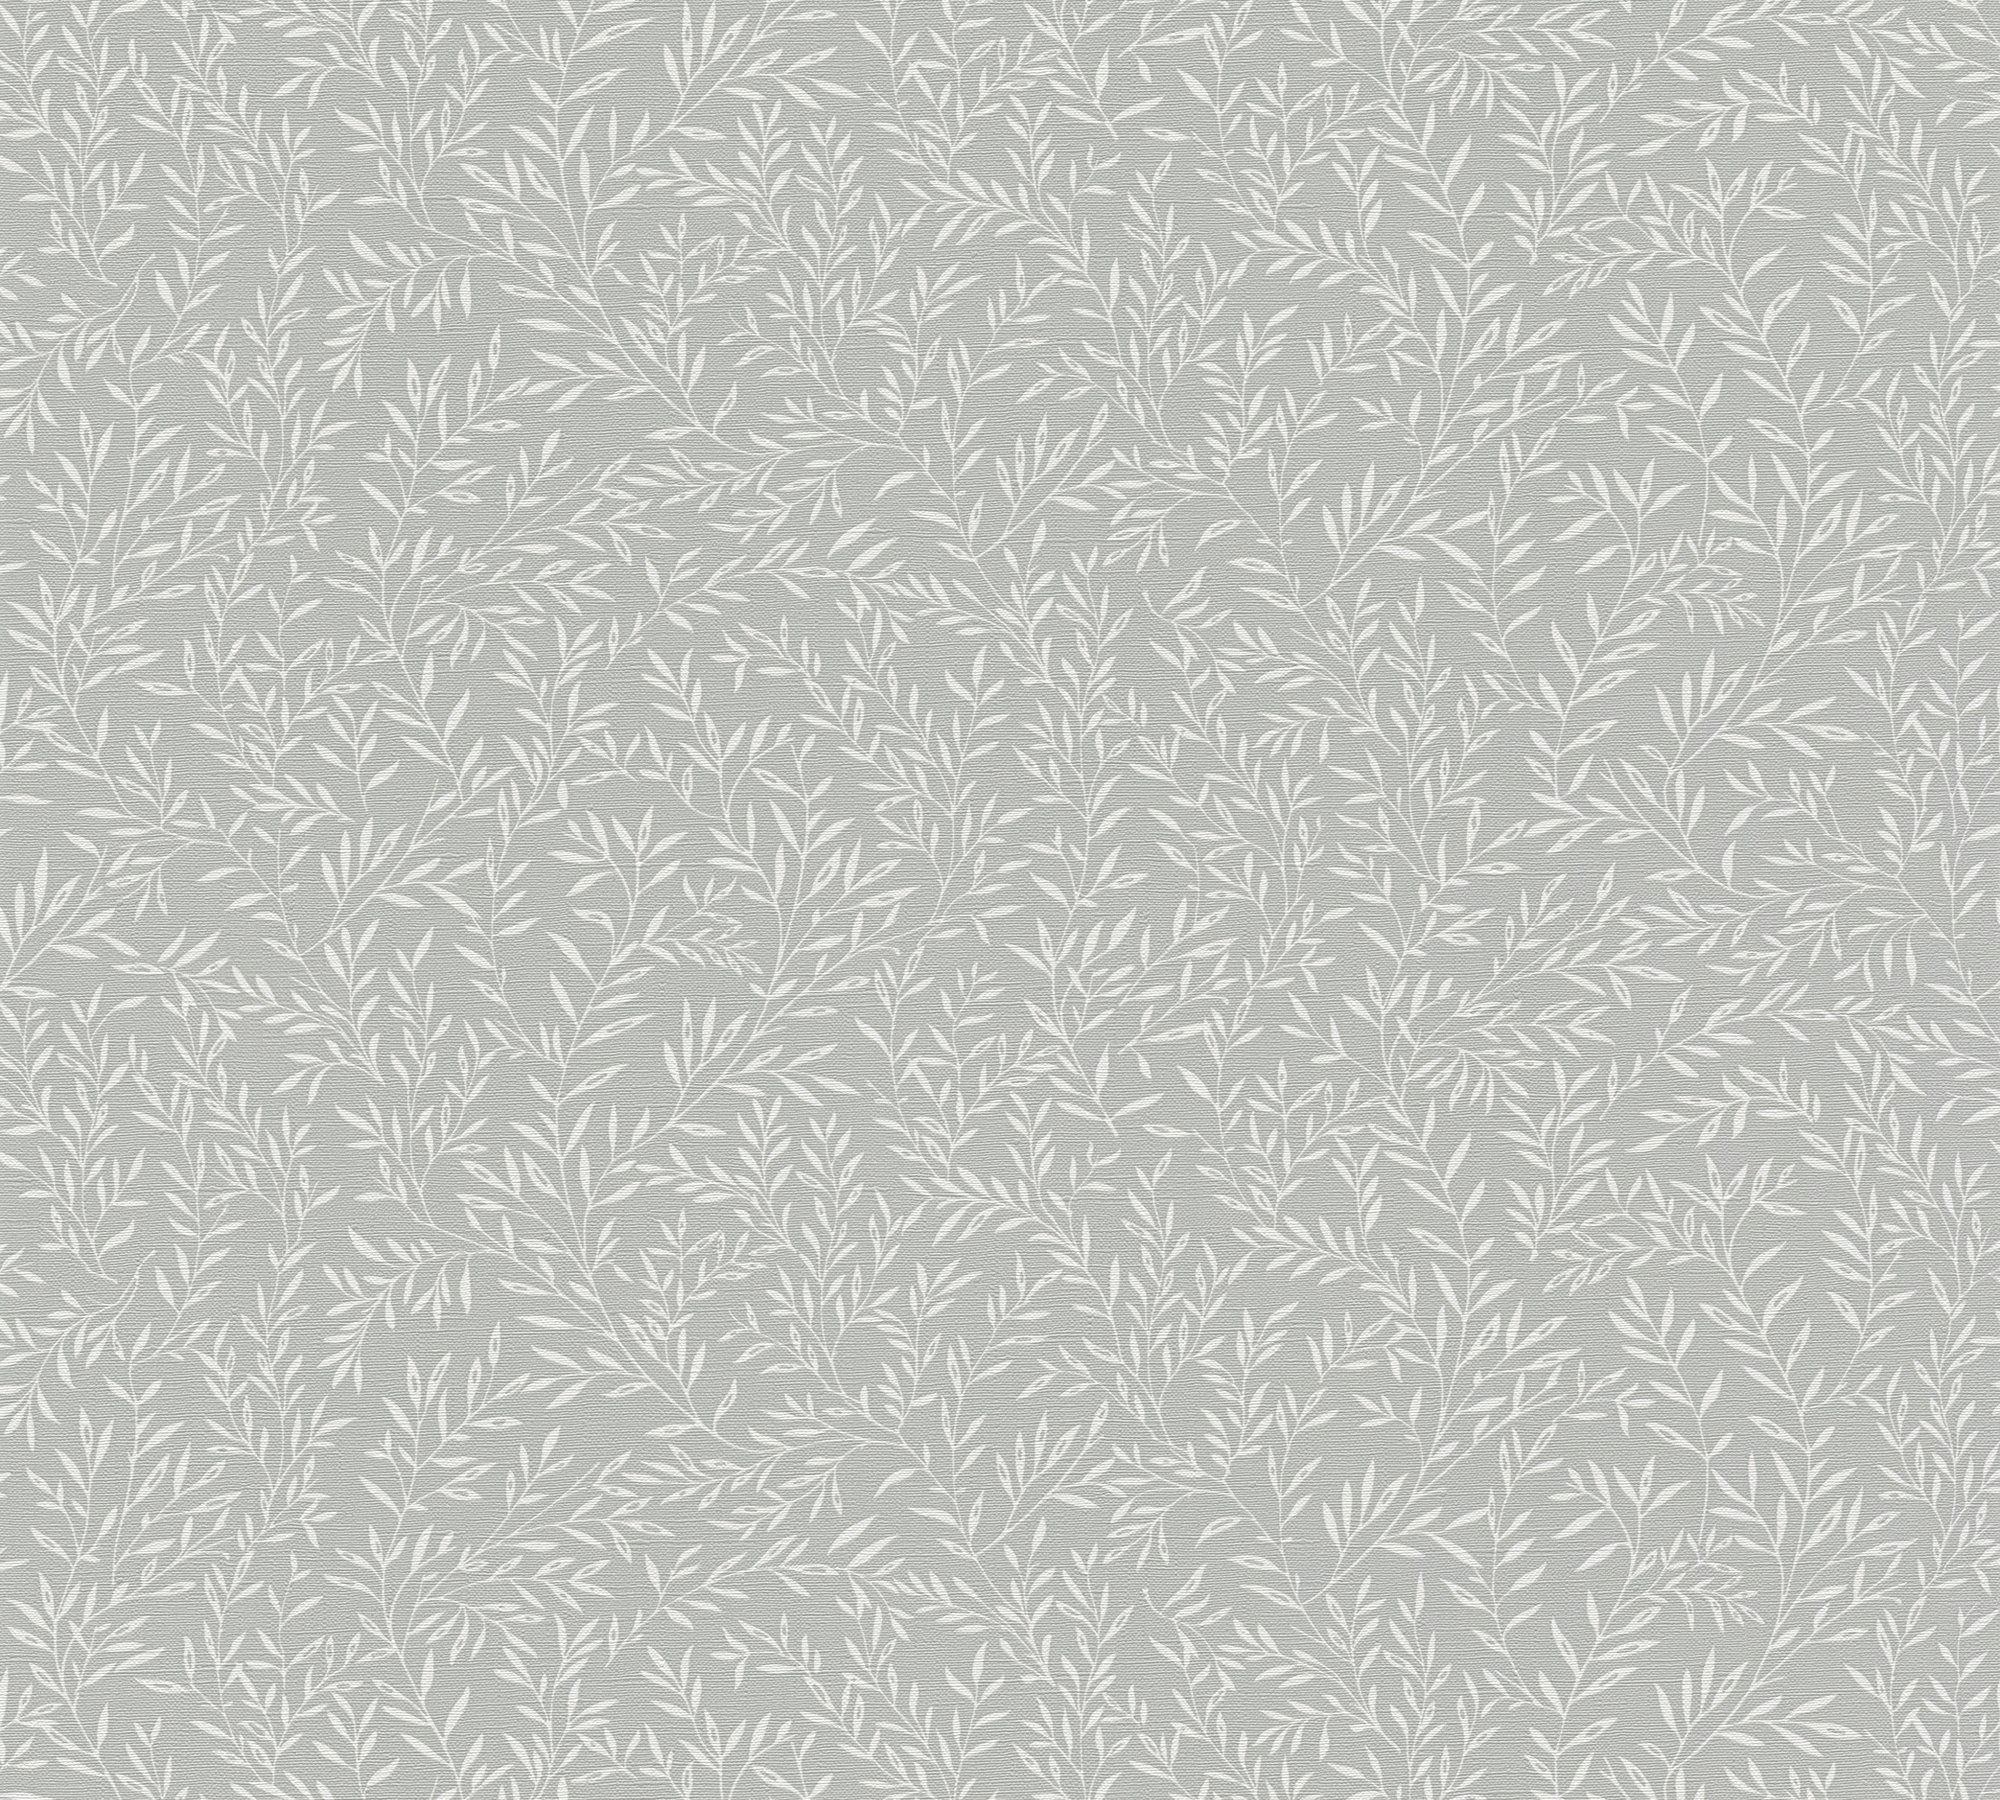 Floral, Landhaustapete St), Grau,Weiß geprägt, (1 A.S. Blätterranke Natur-Tapete Création matt, mit Vliestapete